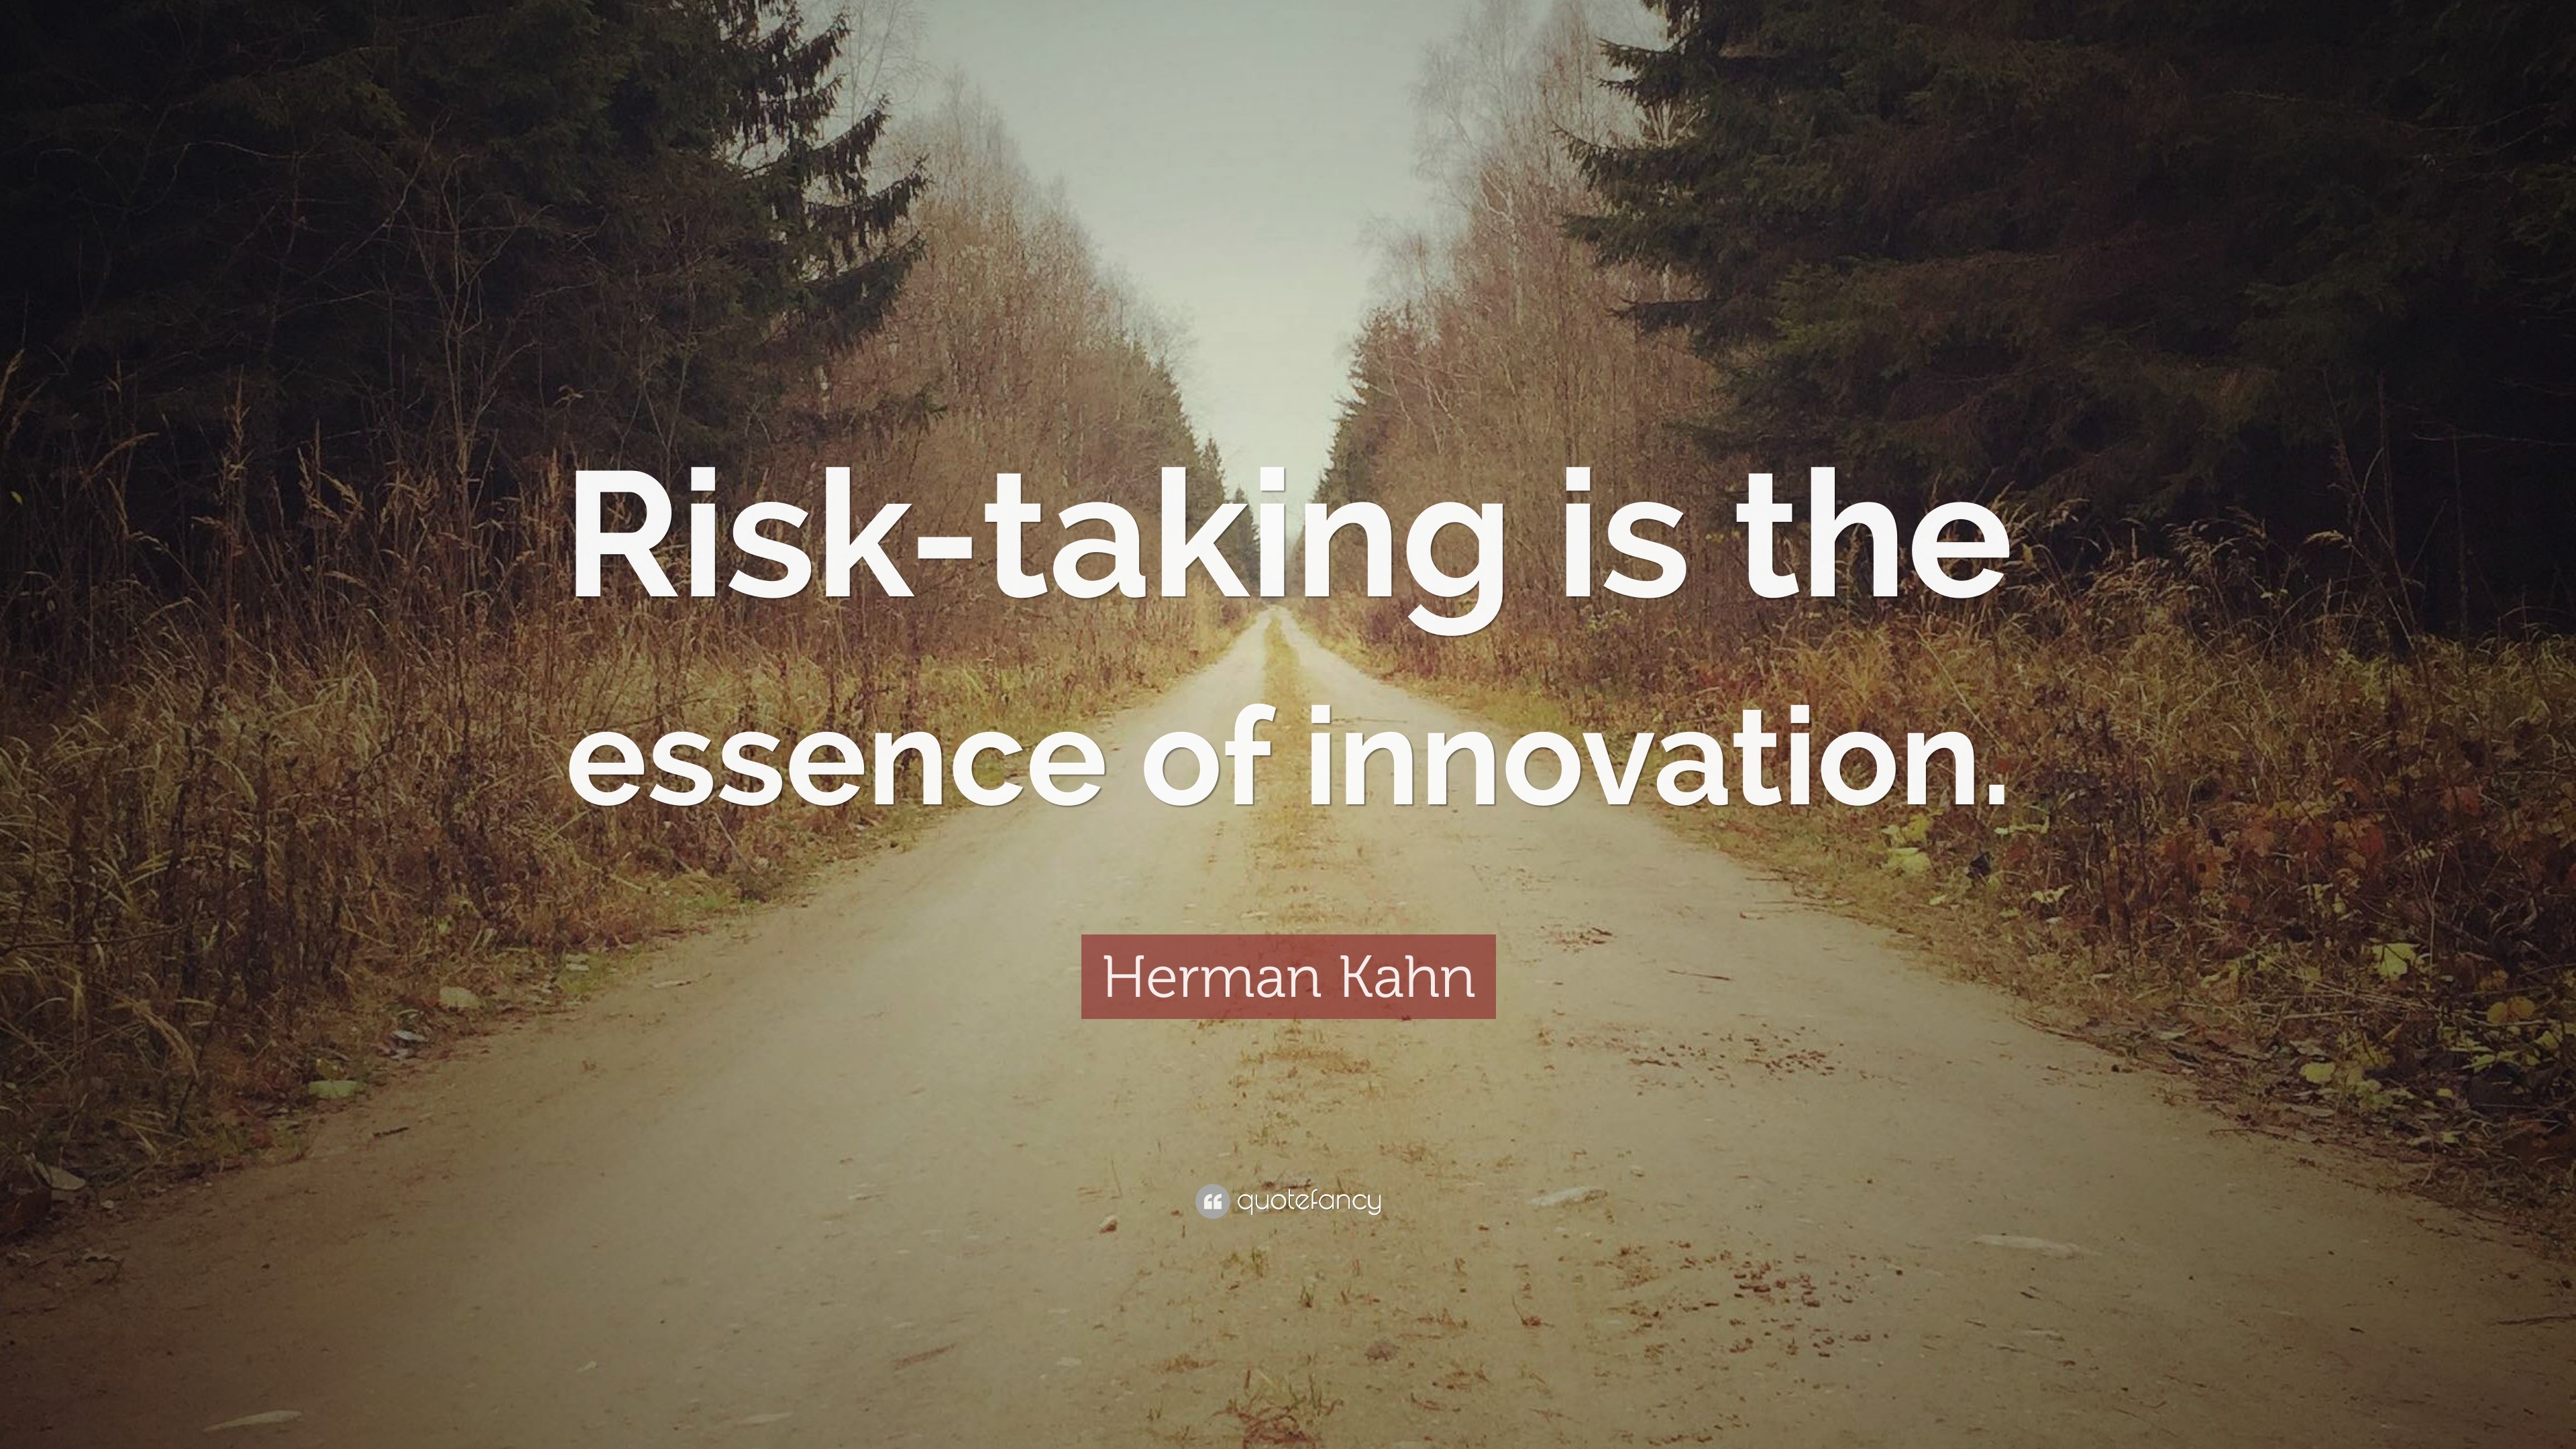 Herman Kahn Quote “Risktaking is the essence of innovation.”